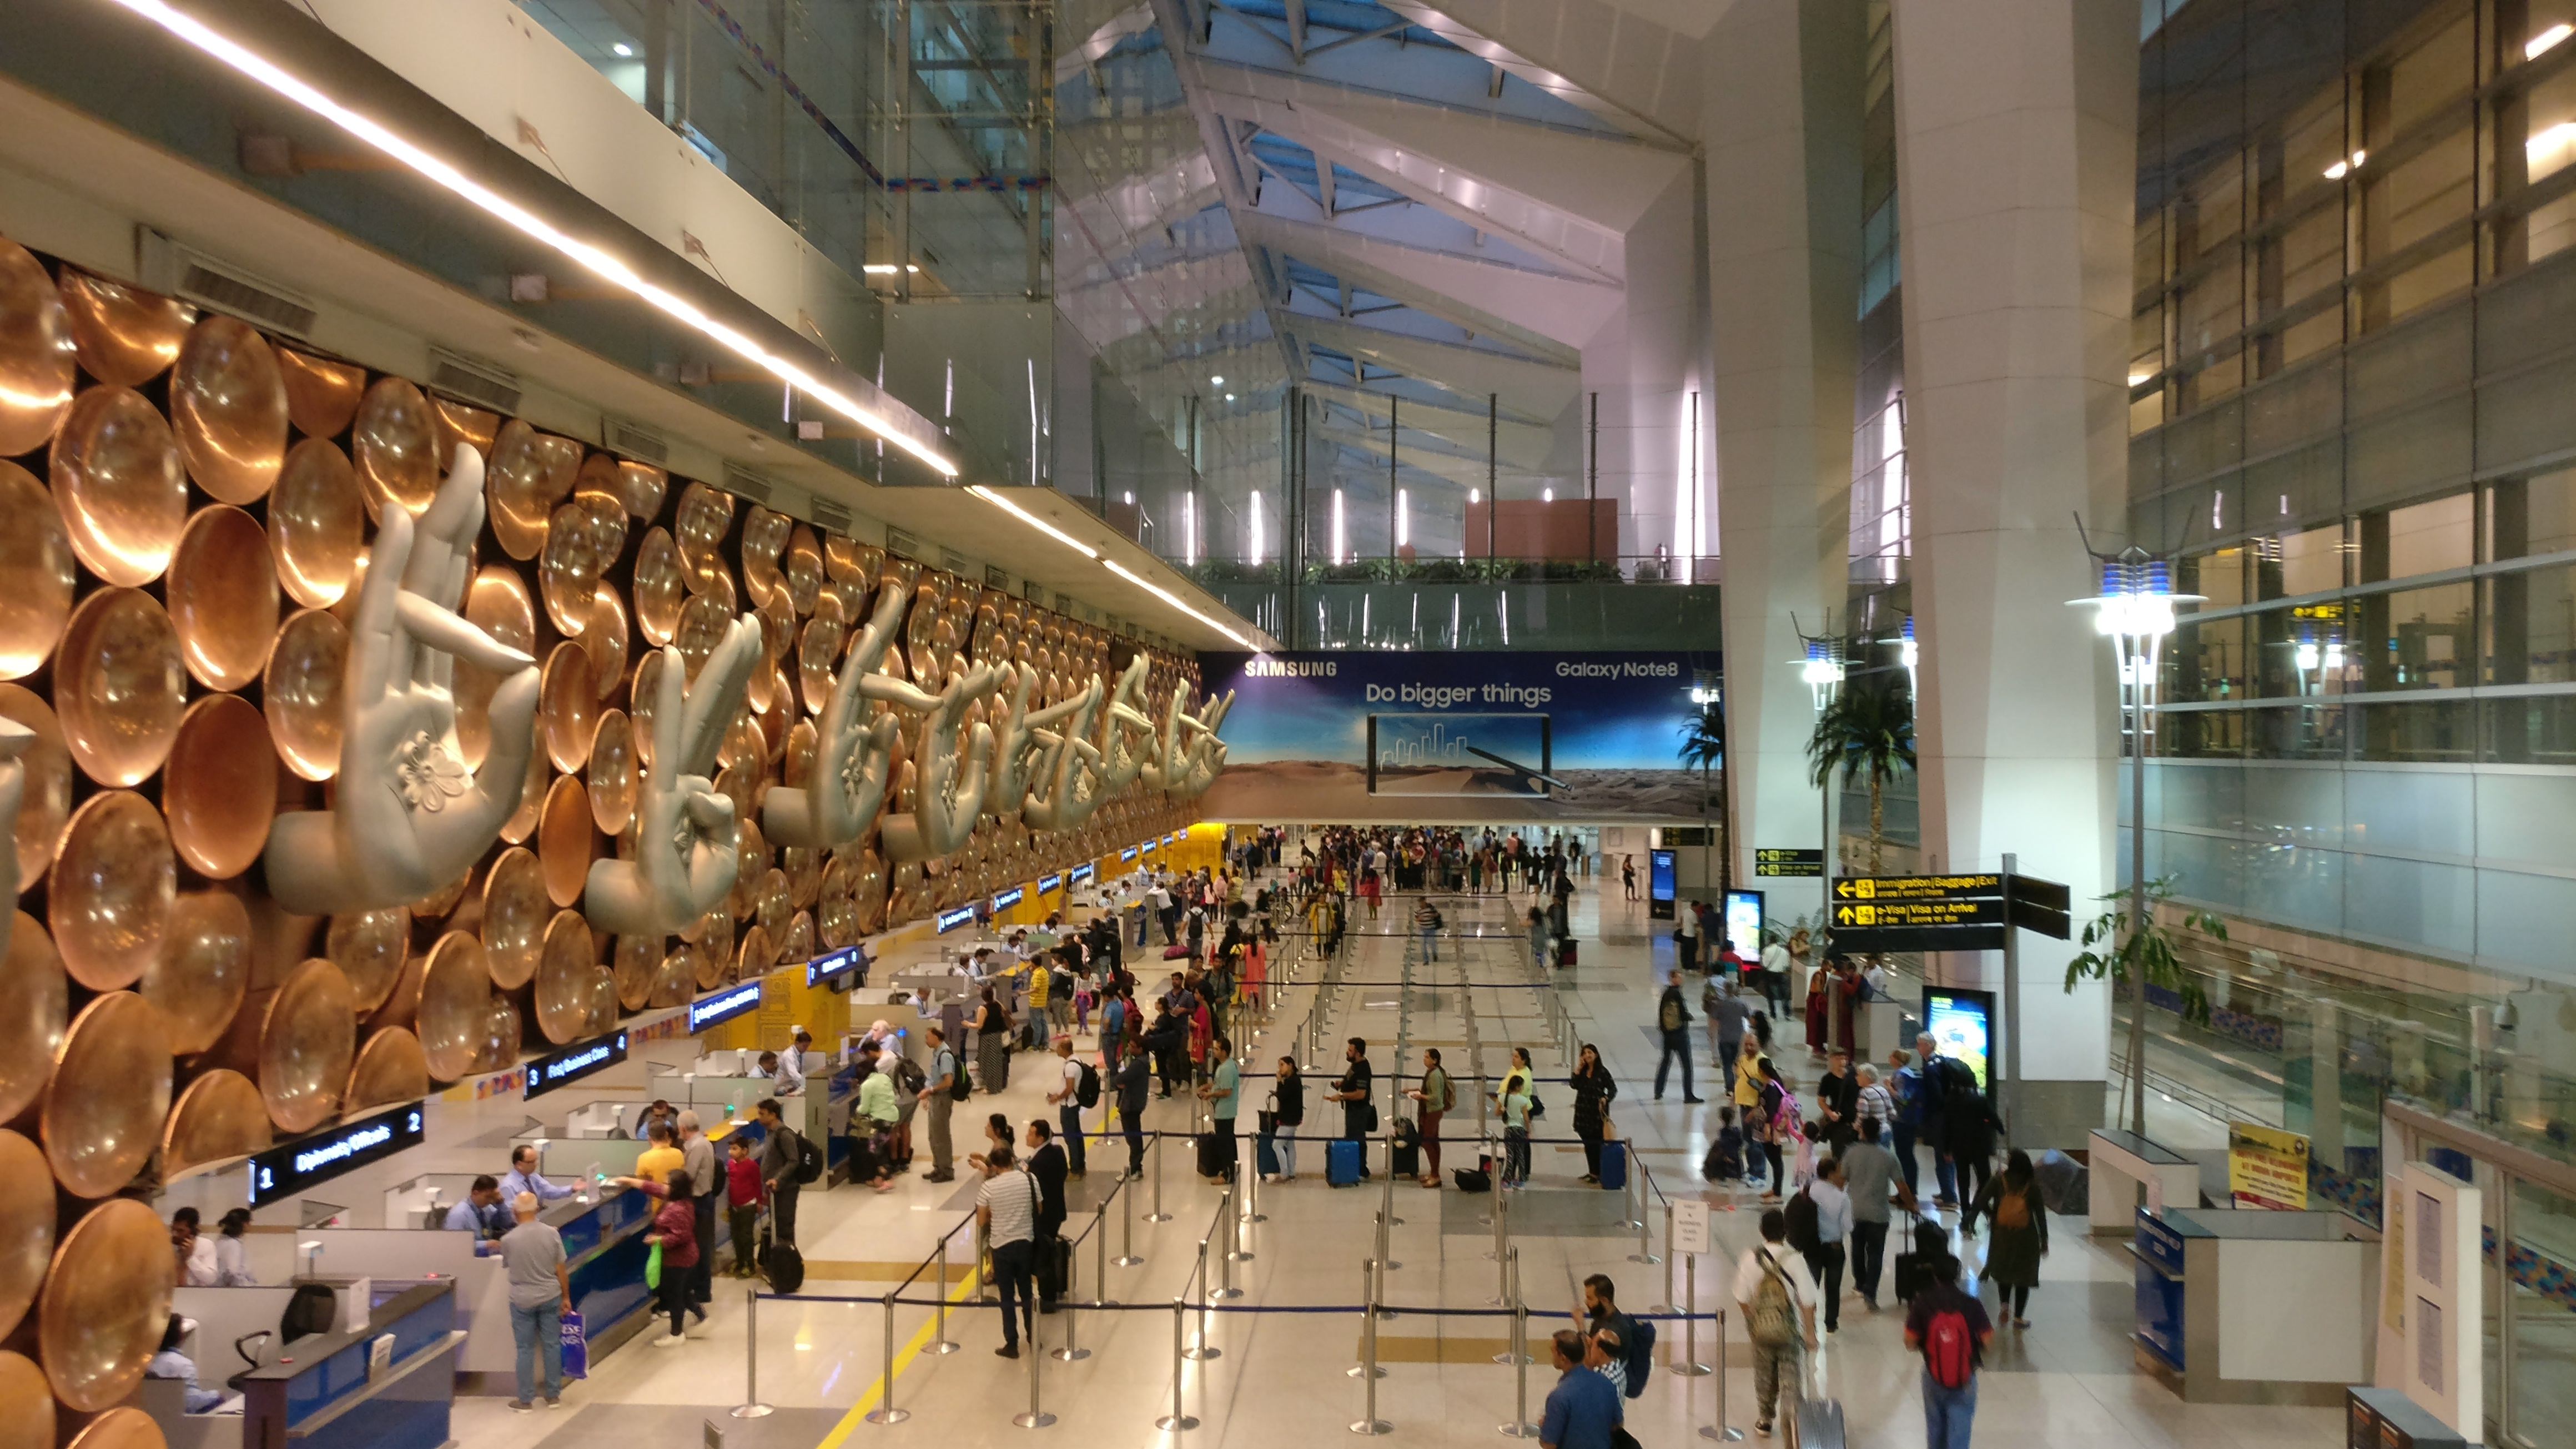 Hyderabad airport